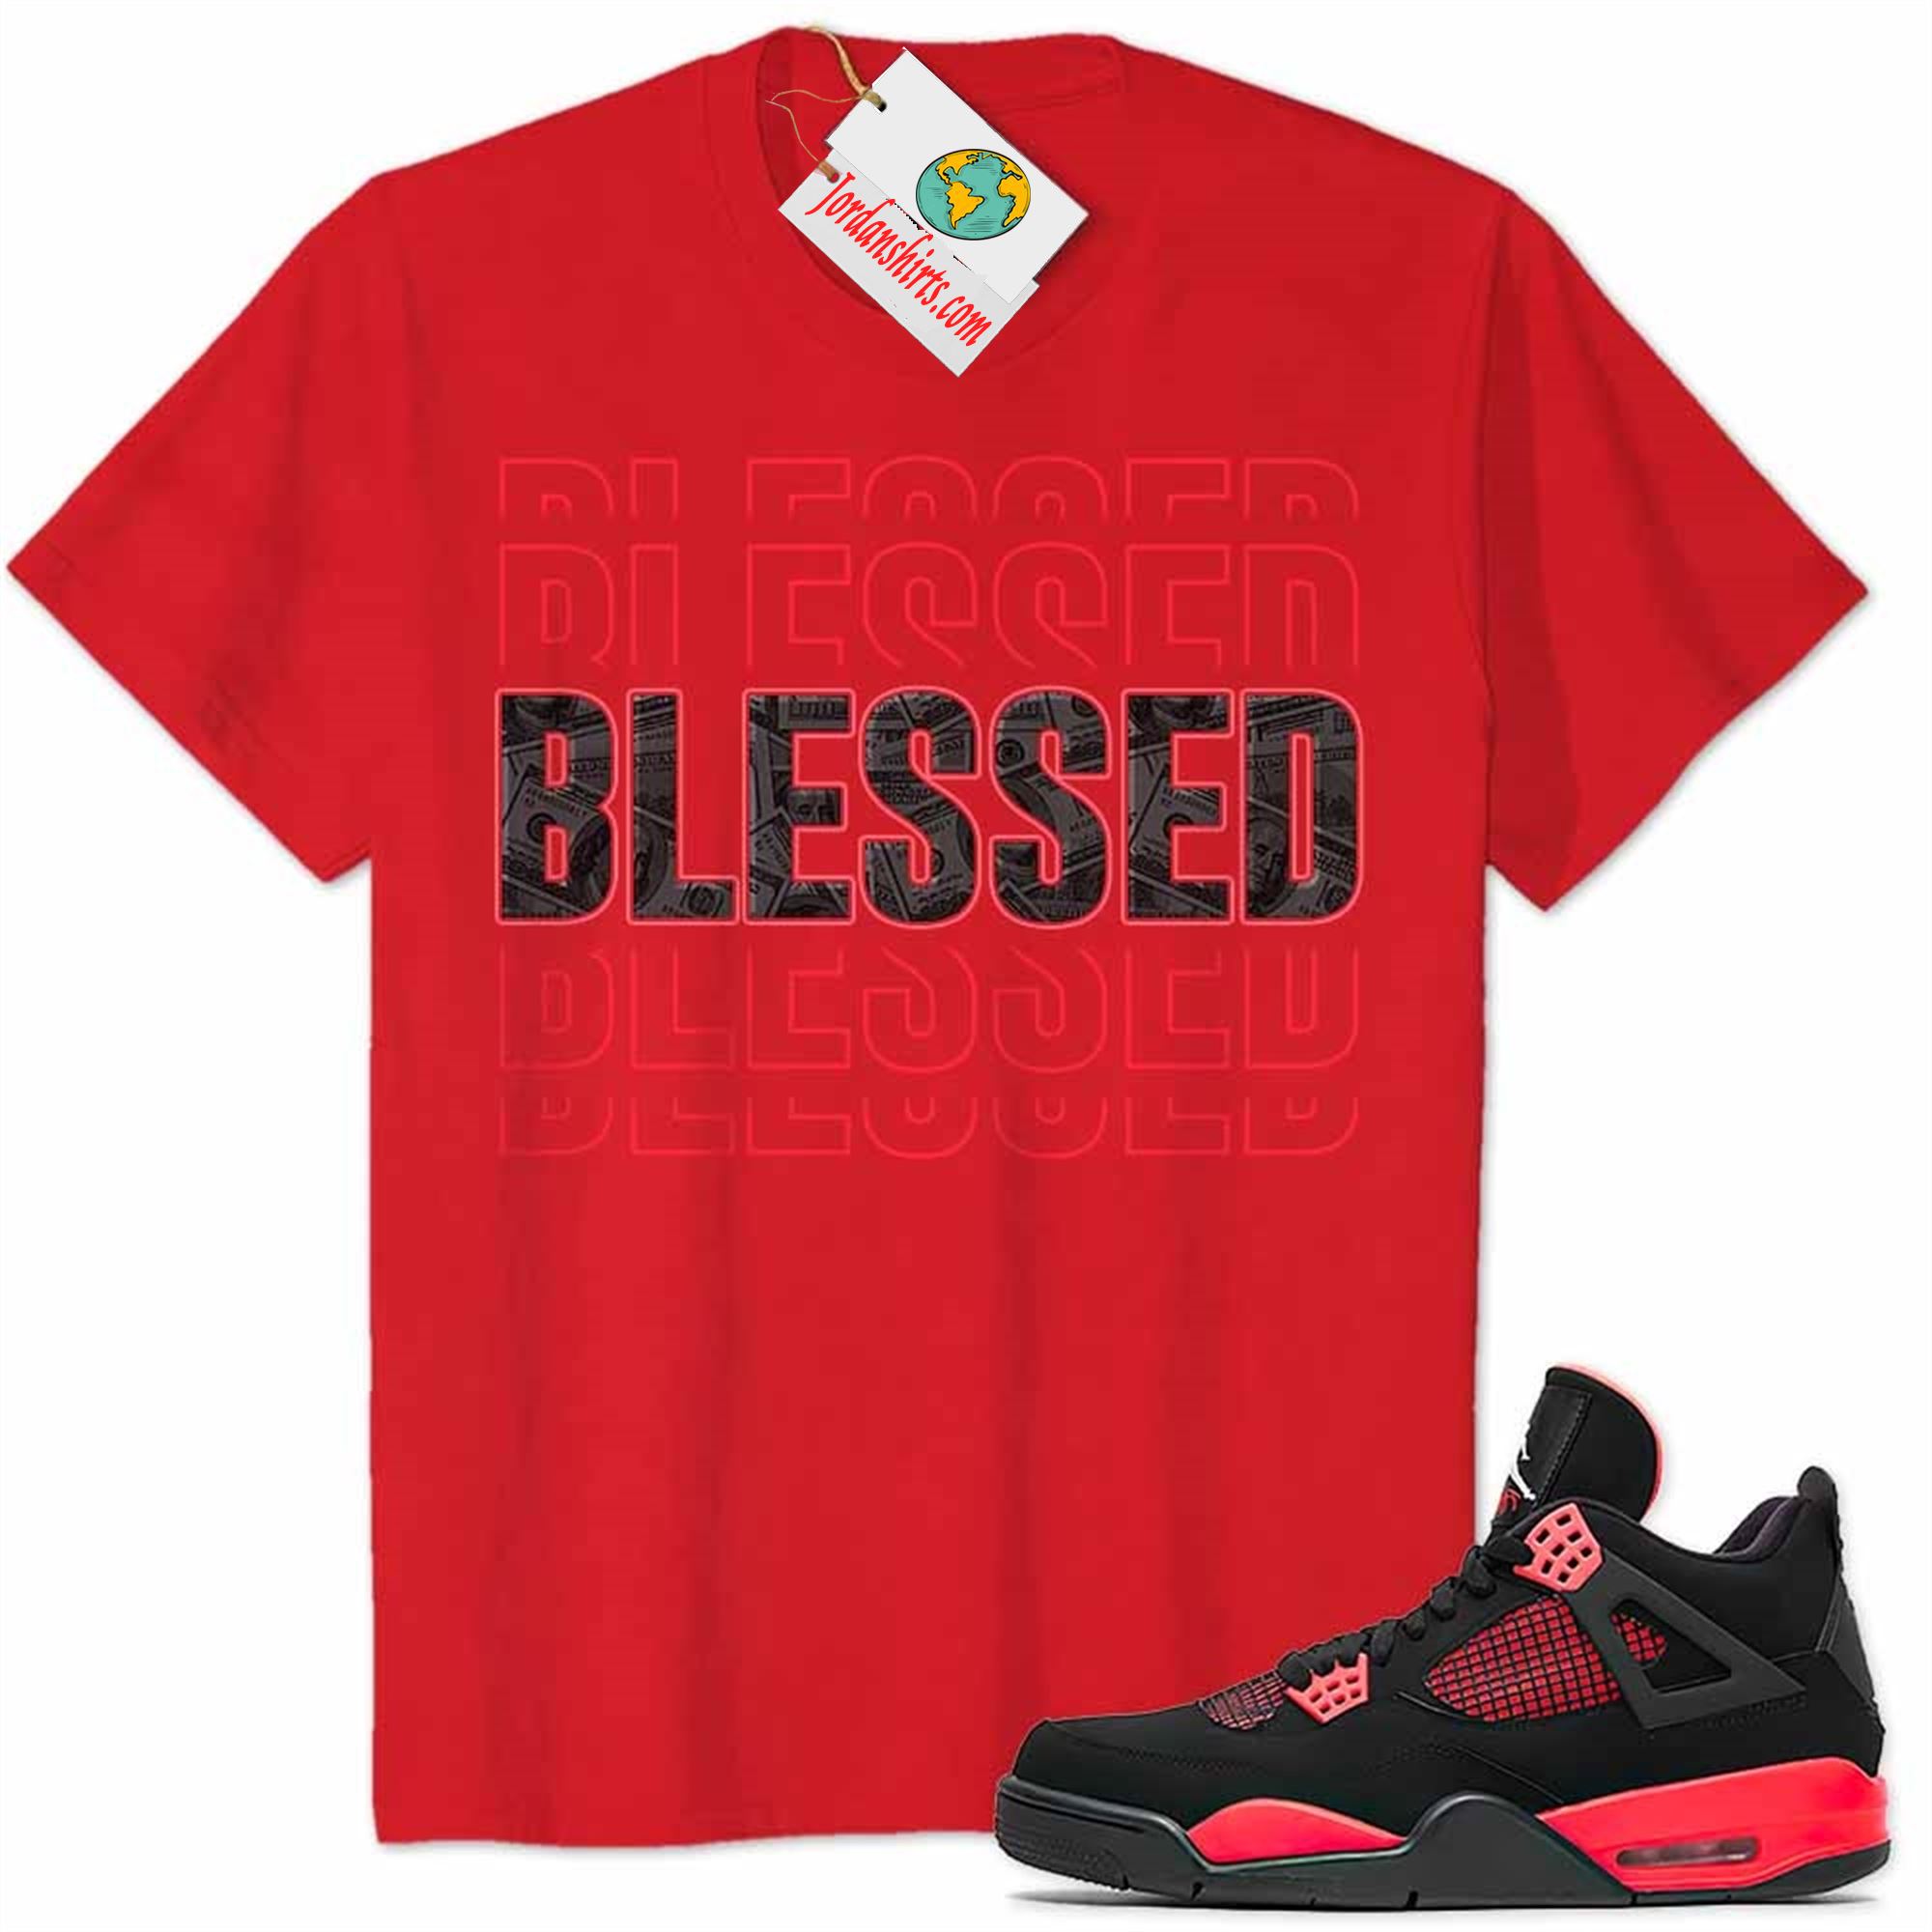 Jordan 4 Shirt, Blessed Dollar Money Red Air Jordan 4 Red Thunder 4s Plus Size Up To 5xl